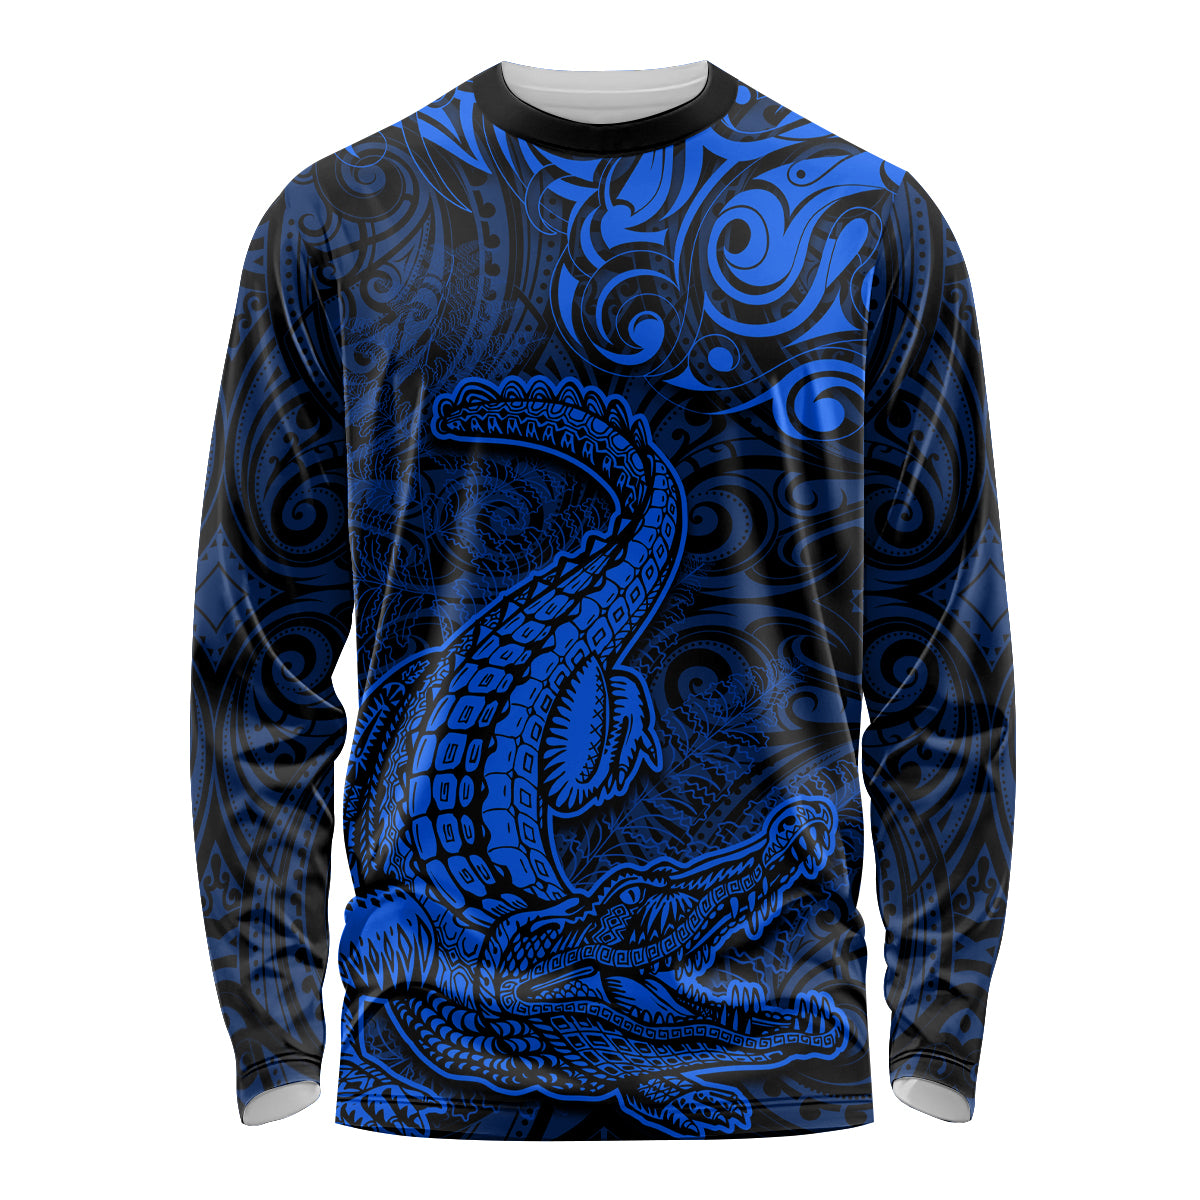 New Zealand Crocodile Tattoo and Fern Long Sleeve Shirt Maori Pattern Blue Color